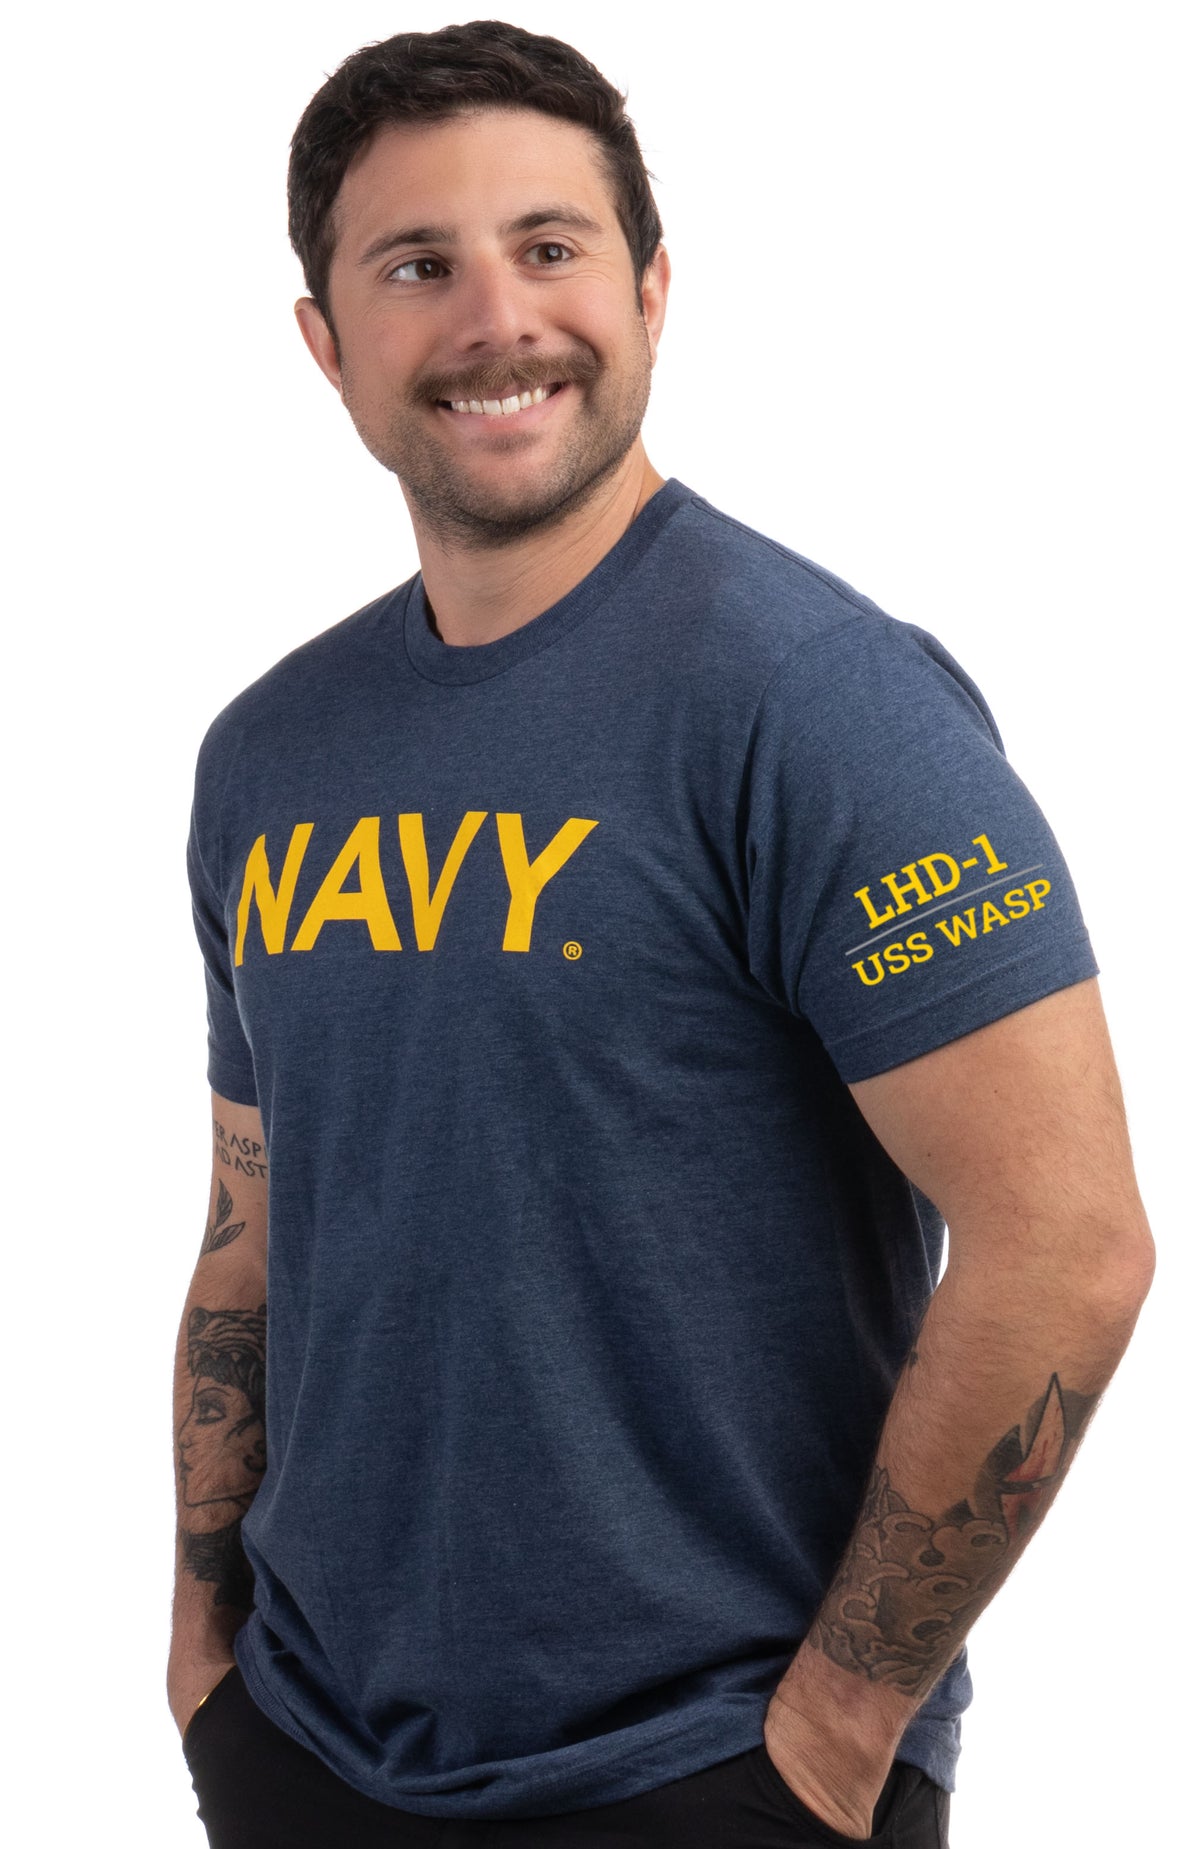 USS Wasp, LHD-1 | U.S. Navy Sailor Veteran USN United States Naval T-shirt for Men Women